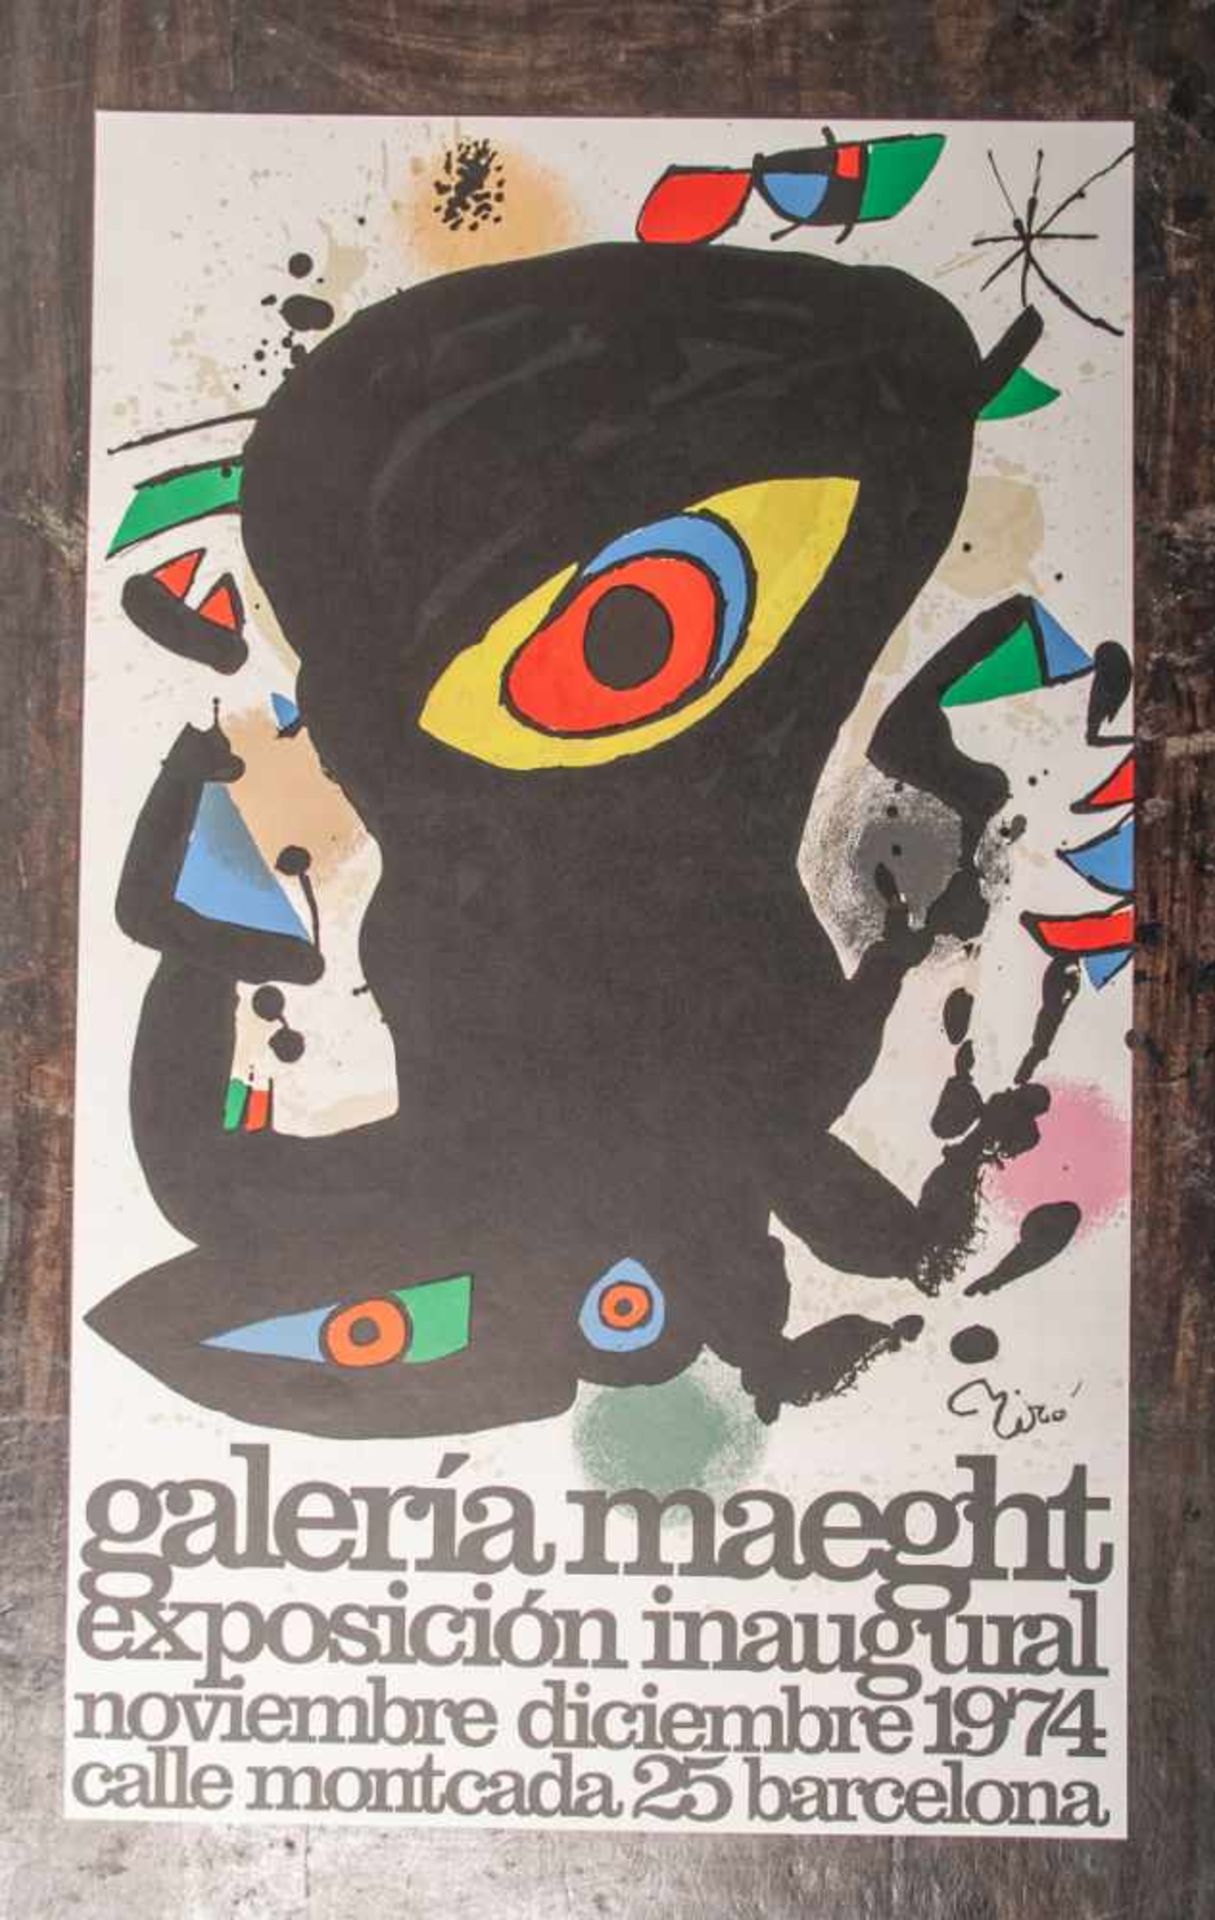 Miró, Joan (1893 - 1983), Ausstellungsplakat "Exposicion inaugural noviembre diciembre"für Miró-